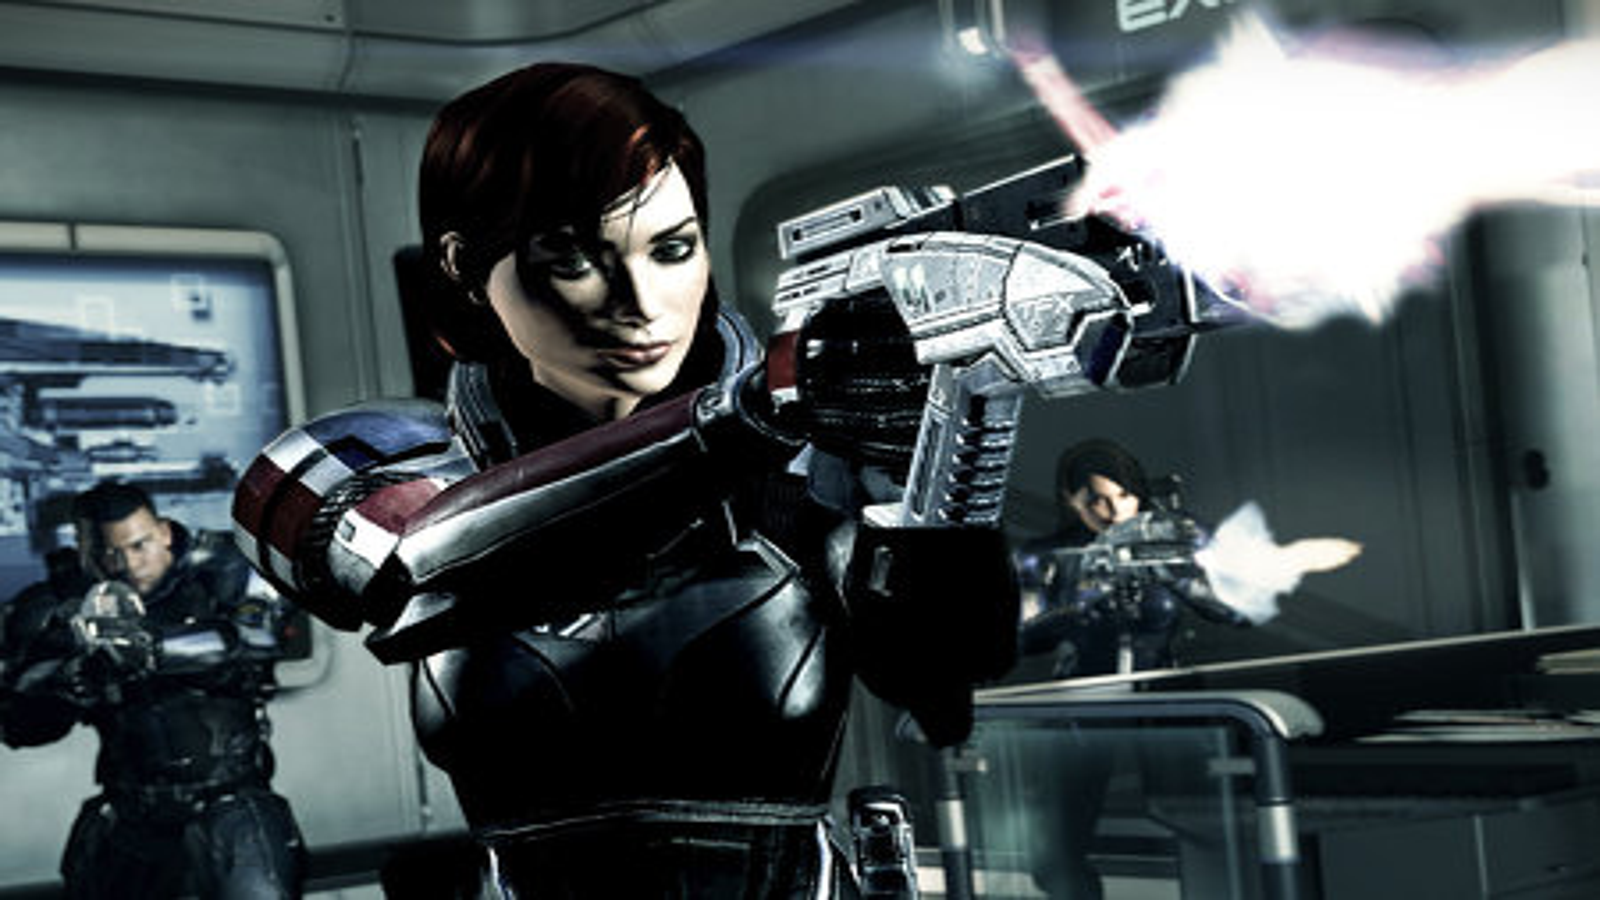 Mass Effect Microsoft Xbox 360 Game Studios Bioware Dolby Digital